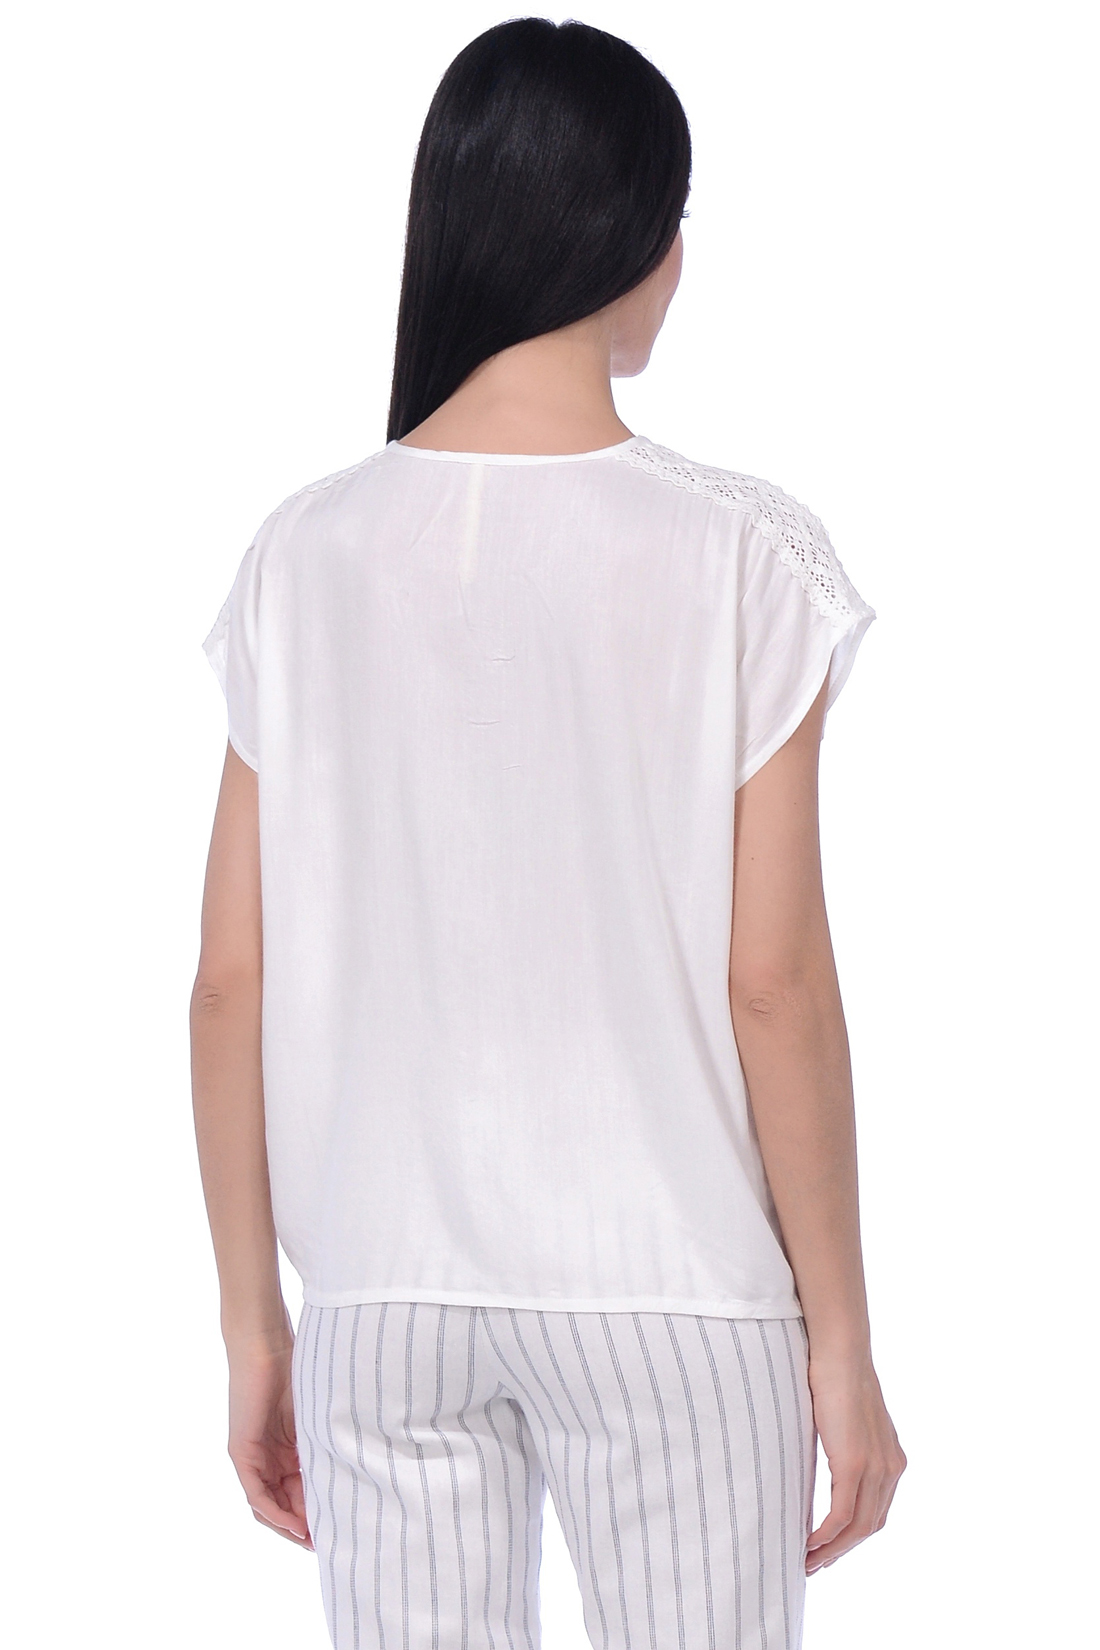 Белая блузка из вискозы (арт. baon B199058), размер S, цвет белый Белая блузка из вискозы (арт. baon B199058) - фото 2